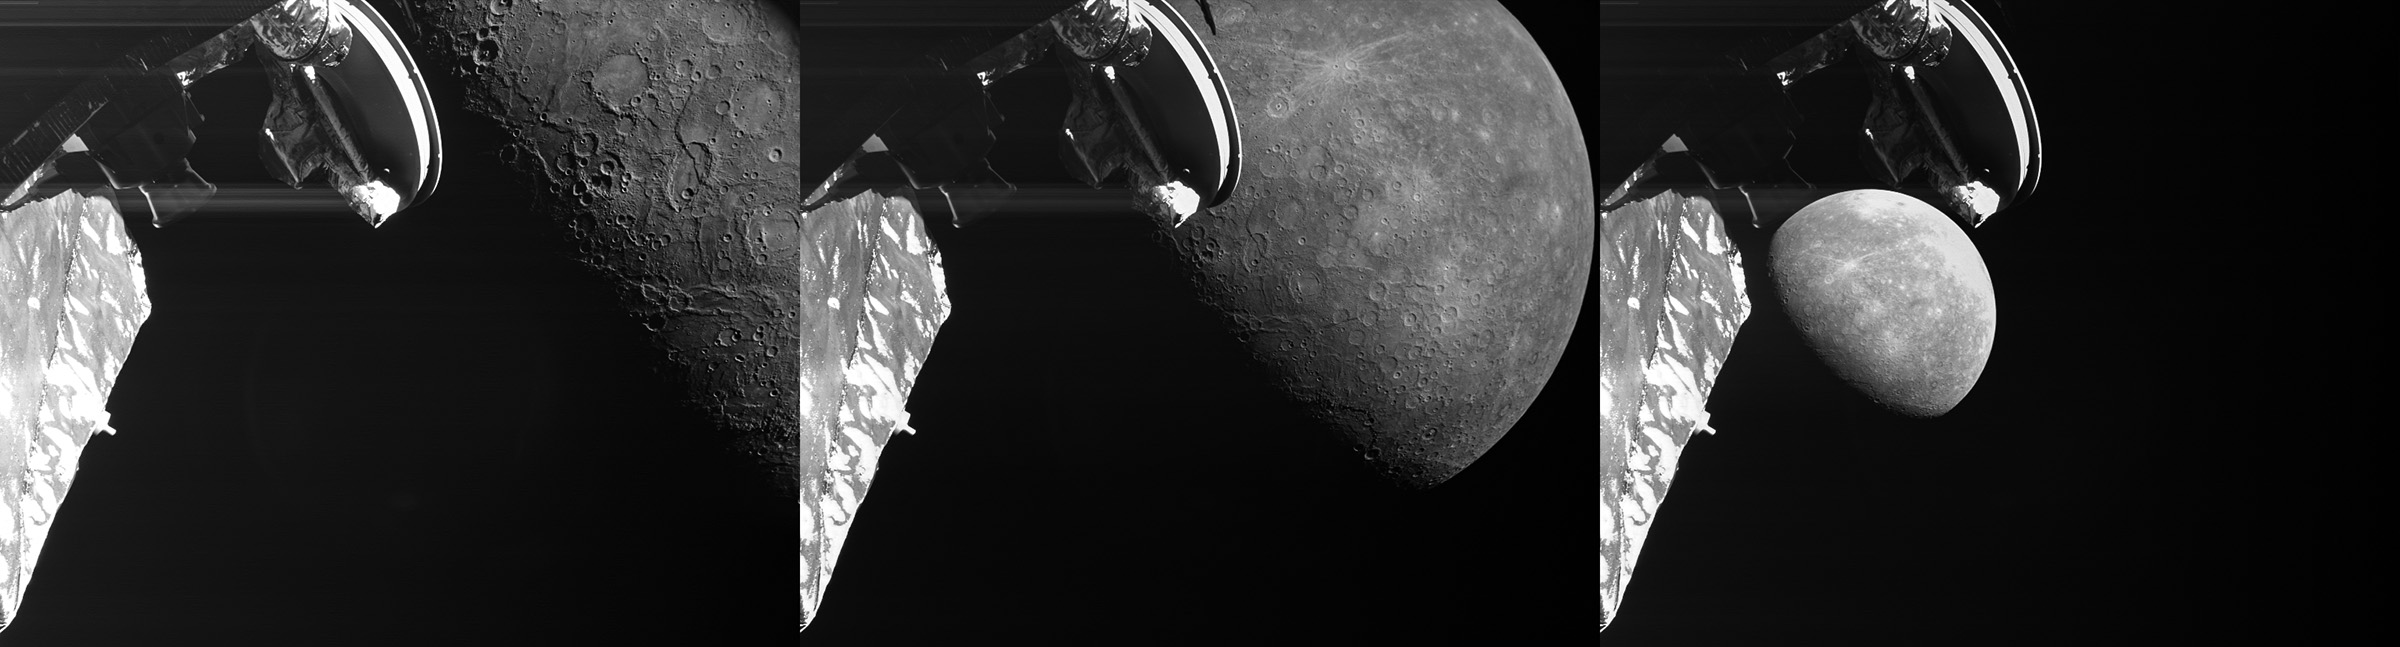 ESA bepicolombo mercury images